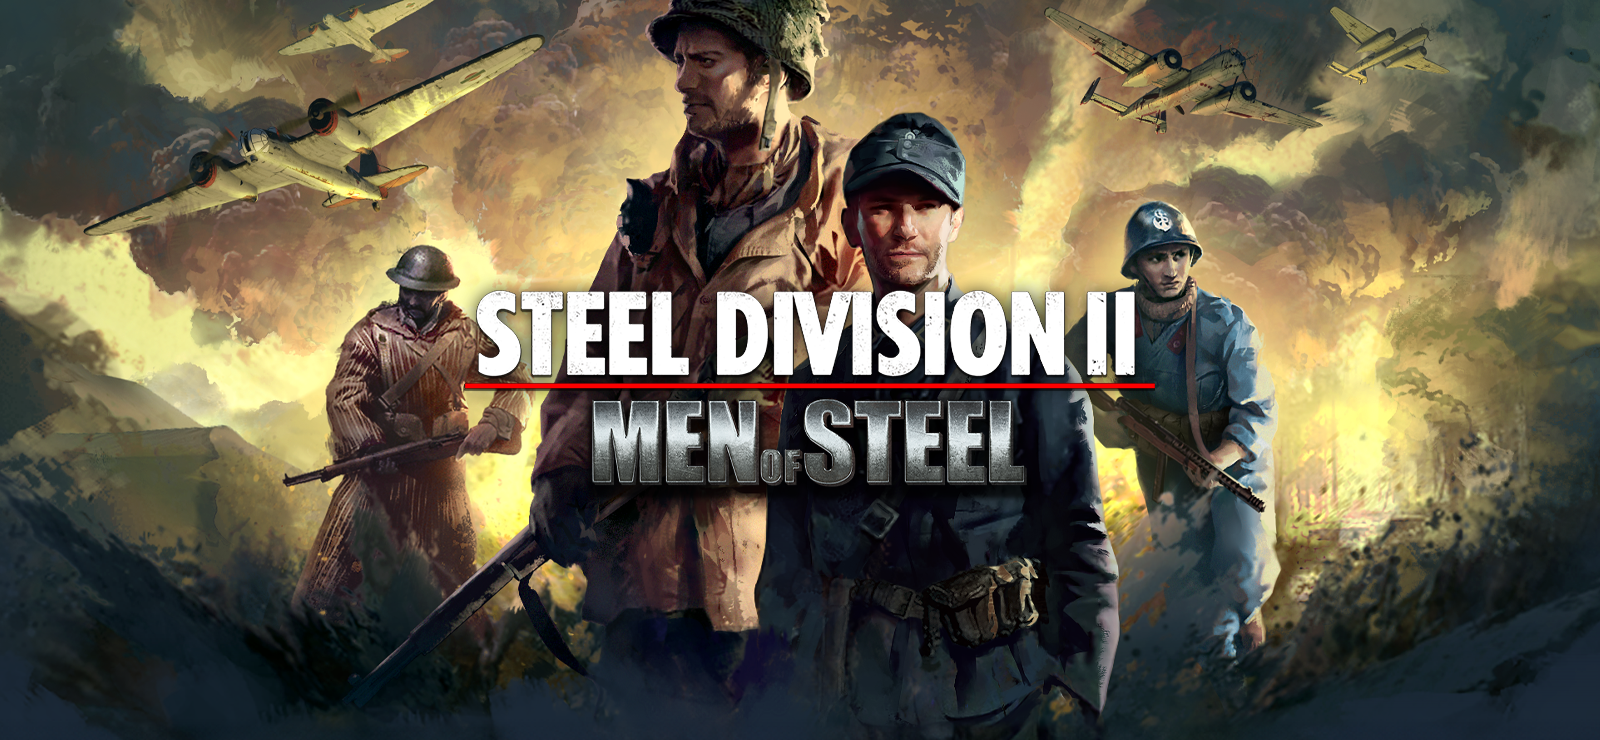 Steel Division 2 - Men Of Steel